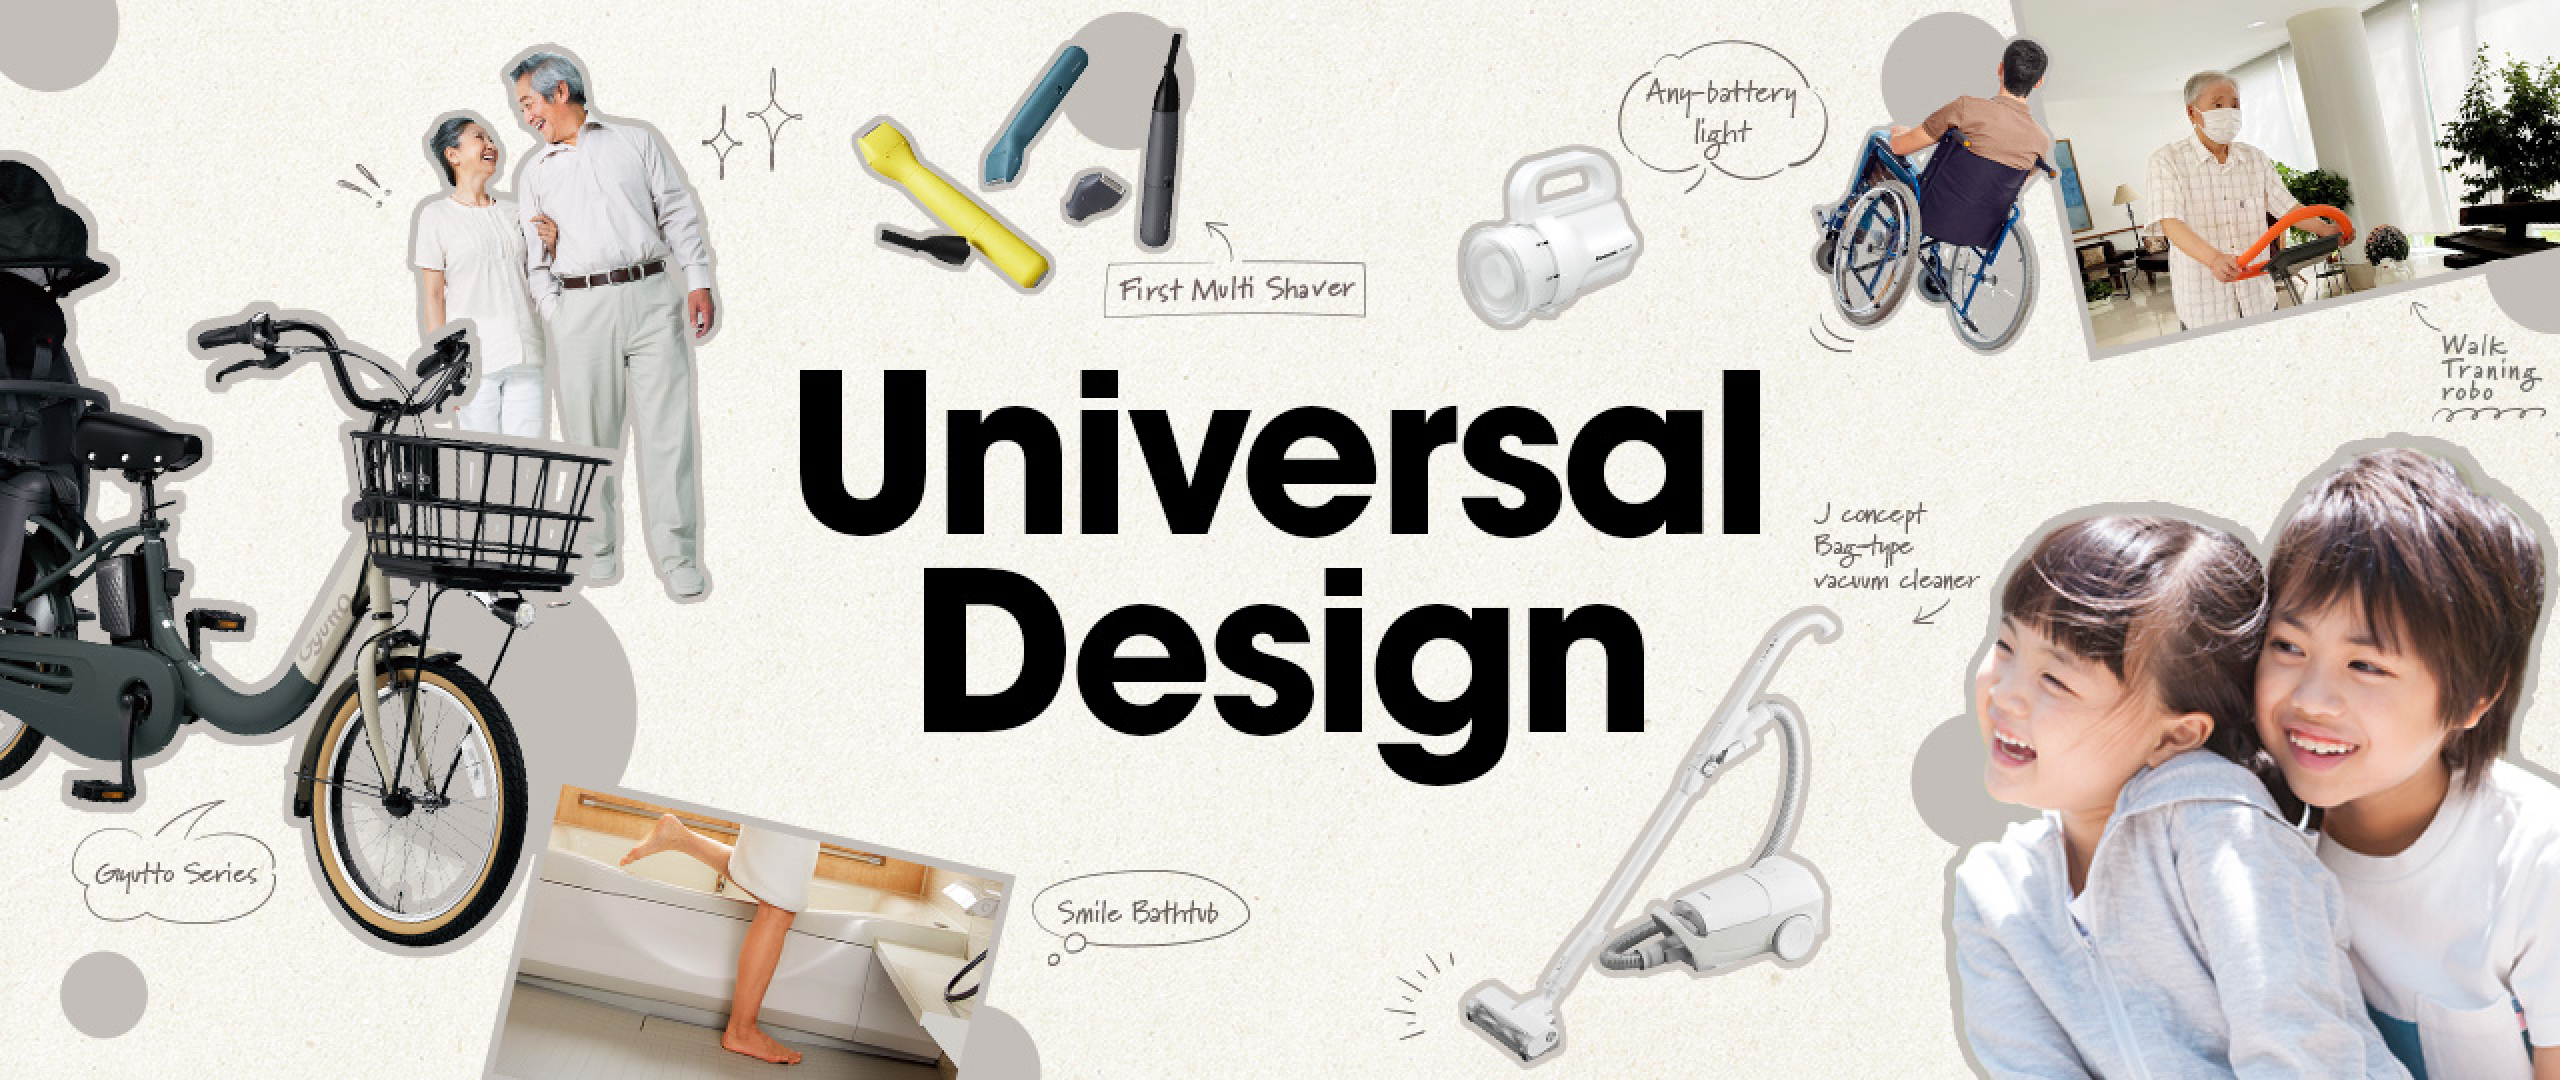 The Universal Design